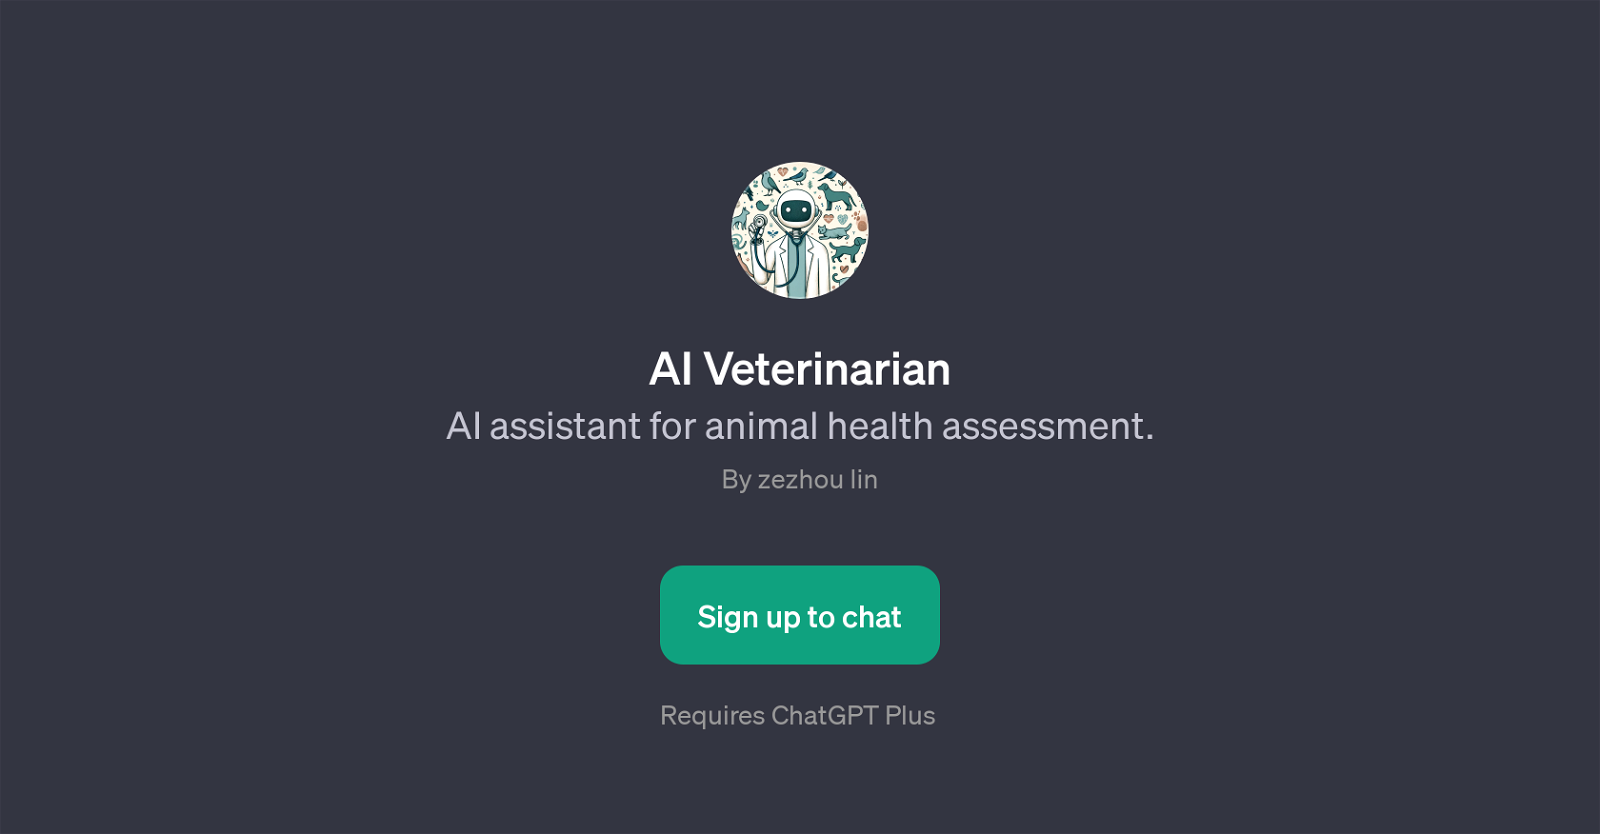 AI Veterinarian website